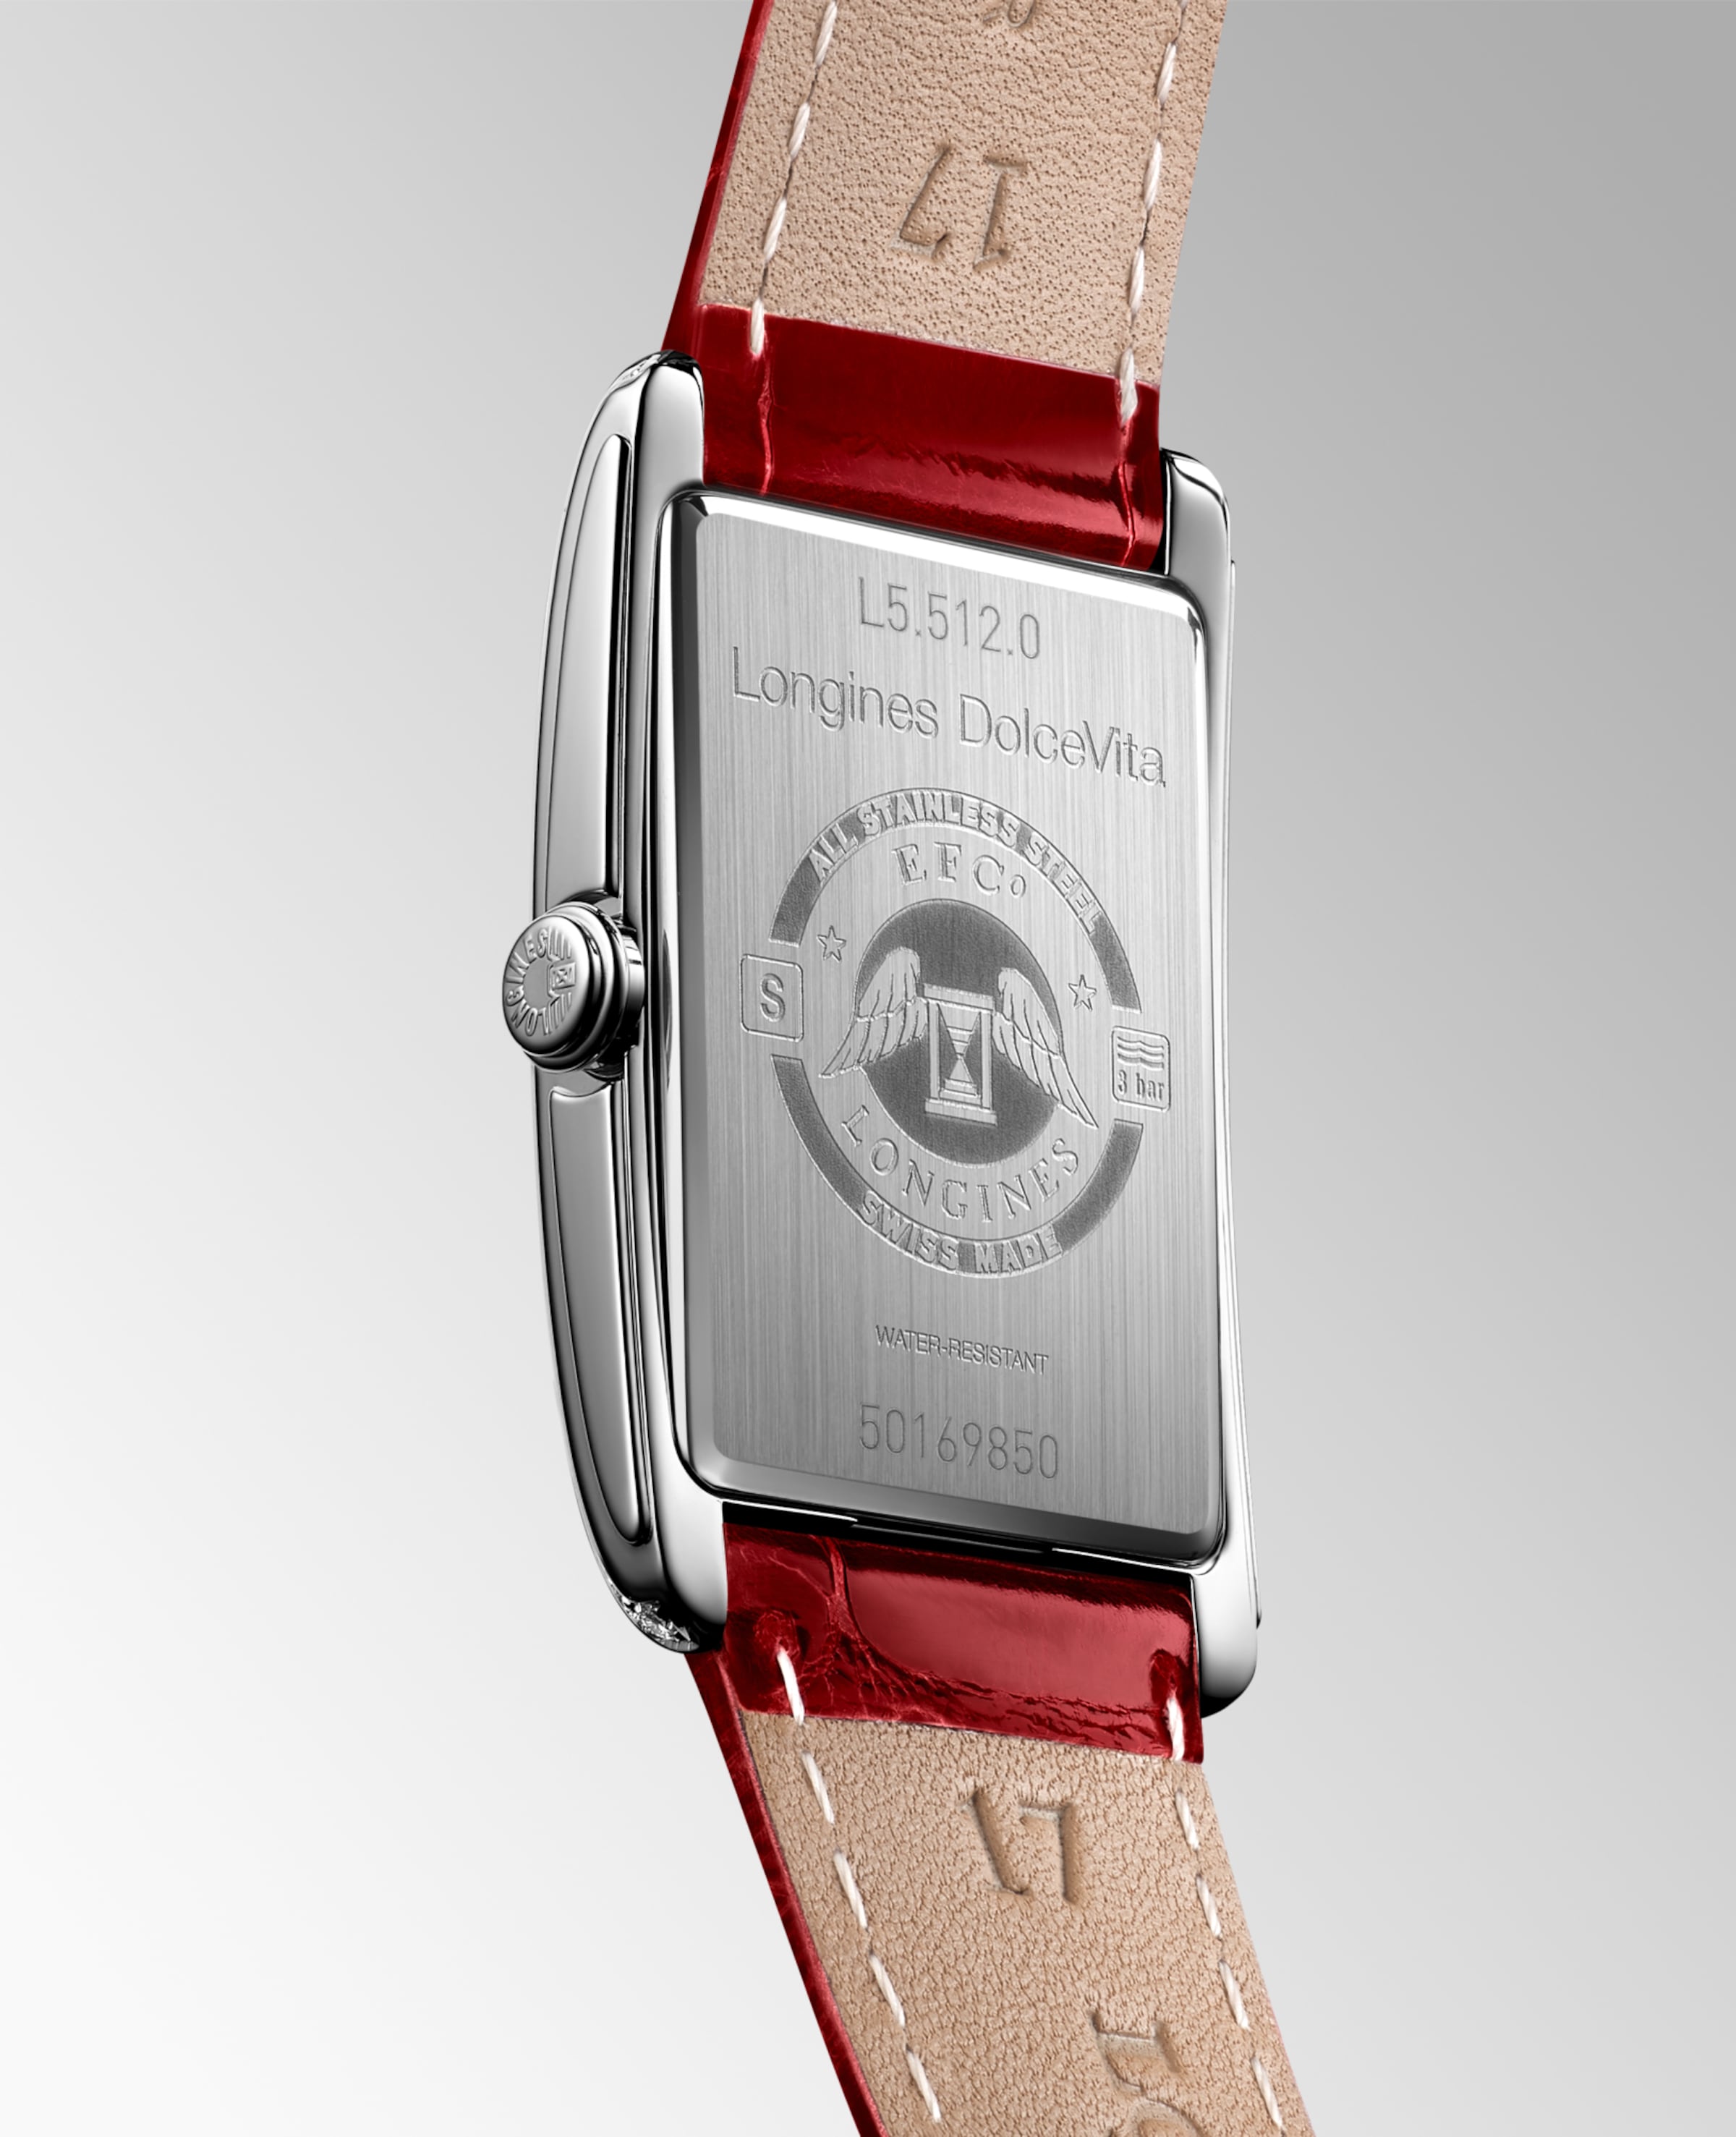 Longines DOLCEVITA Quartz Stainless steel Watch - L5.512.0.71.5